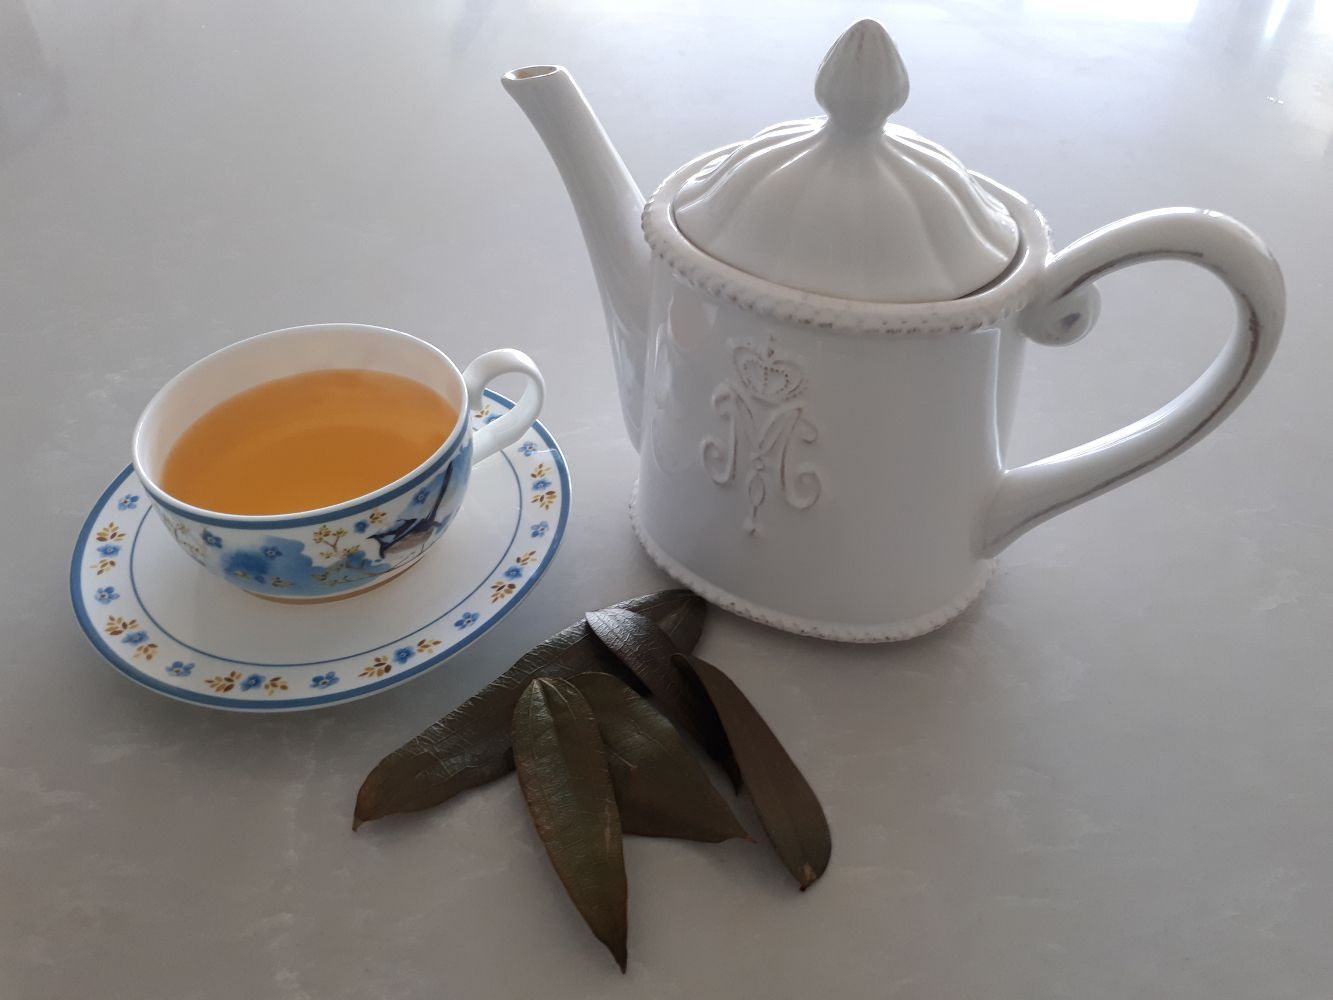 Smilax glciphylla [Tea] sml.jpg